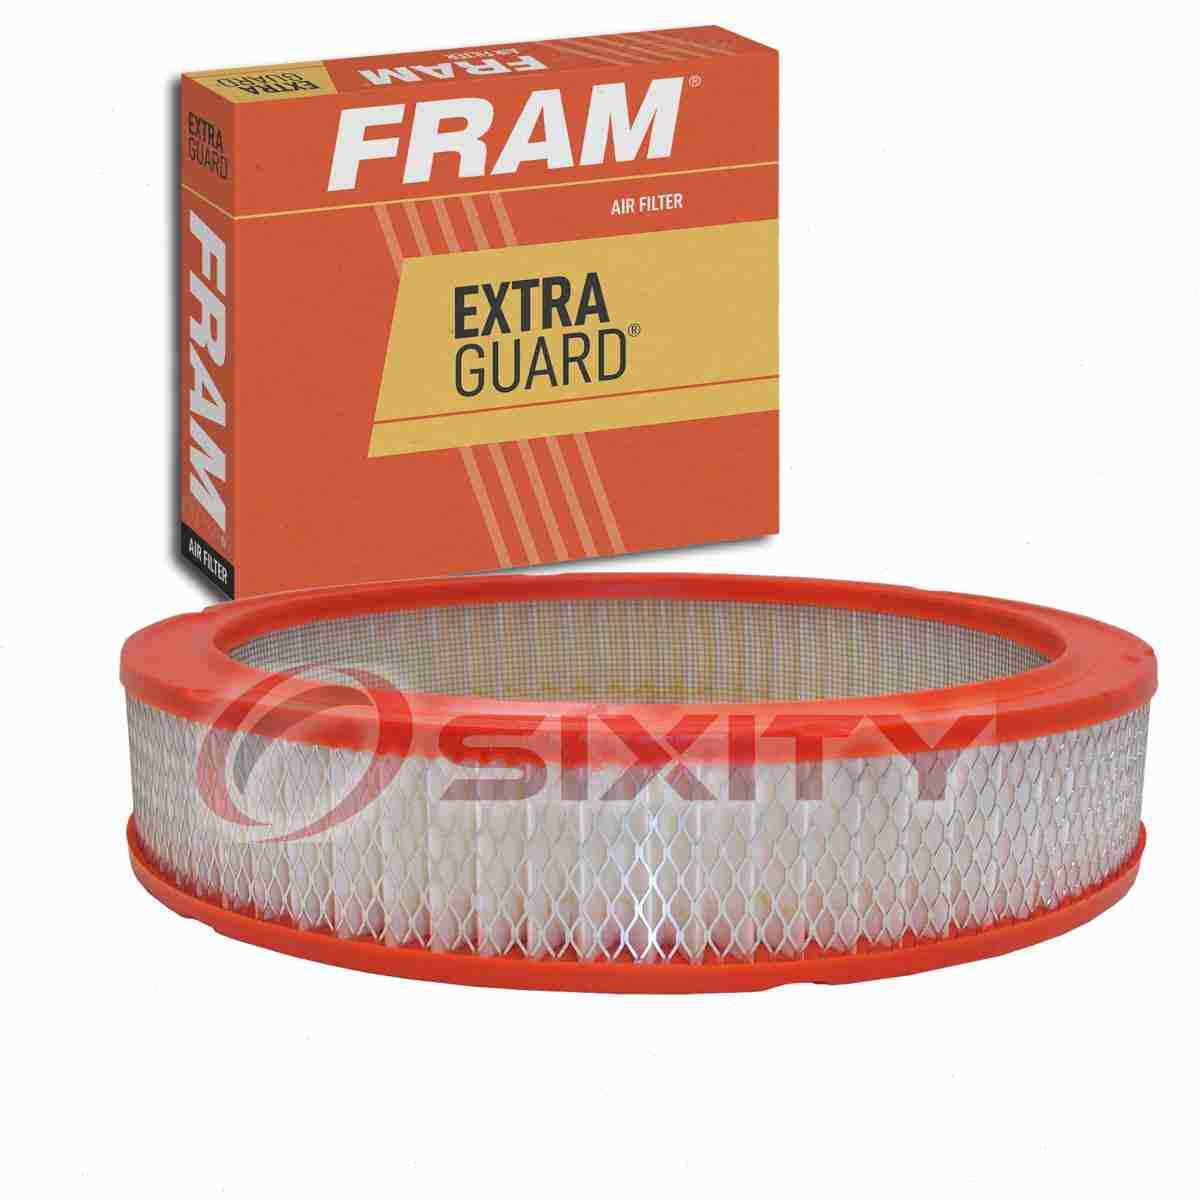 FRAM Extra Guard Air Filter for 1978-1987 GMC Caballero Intake Inlet bm